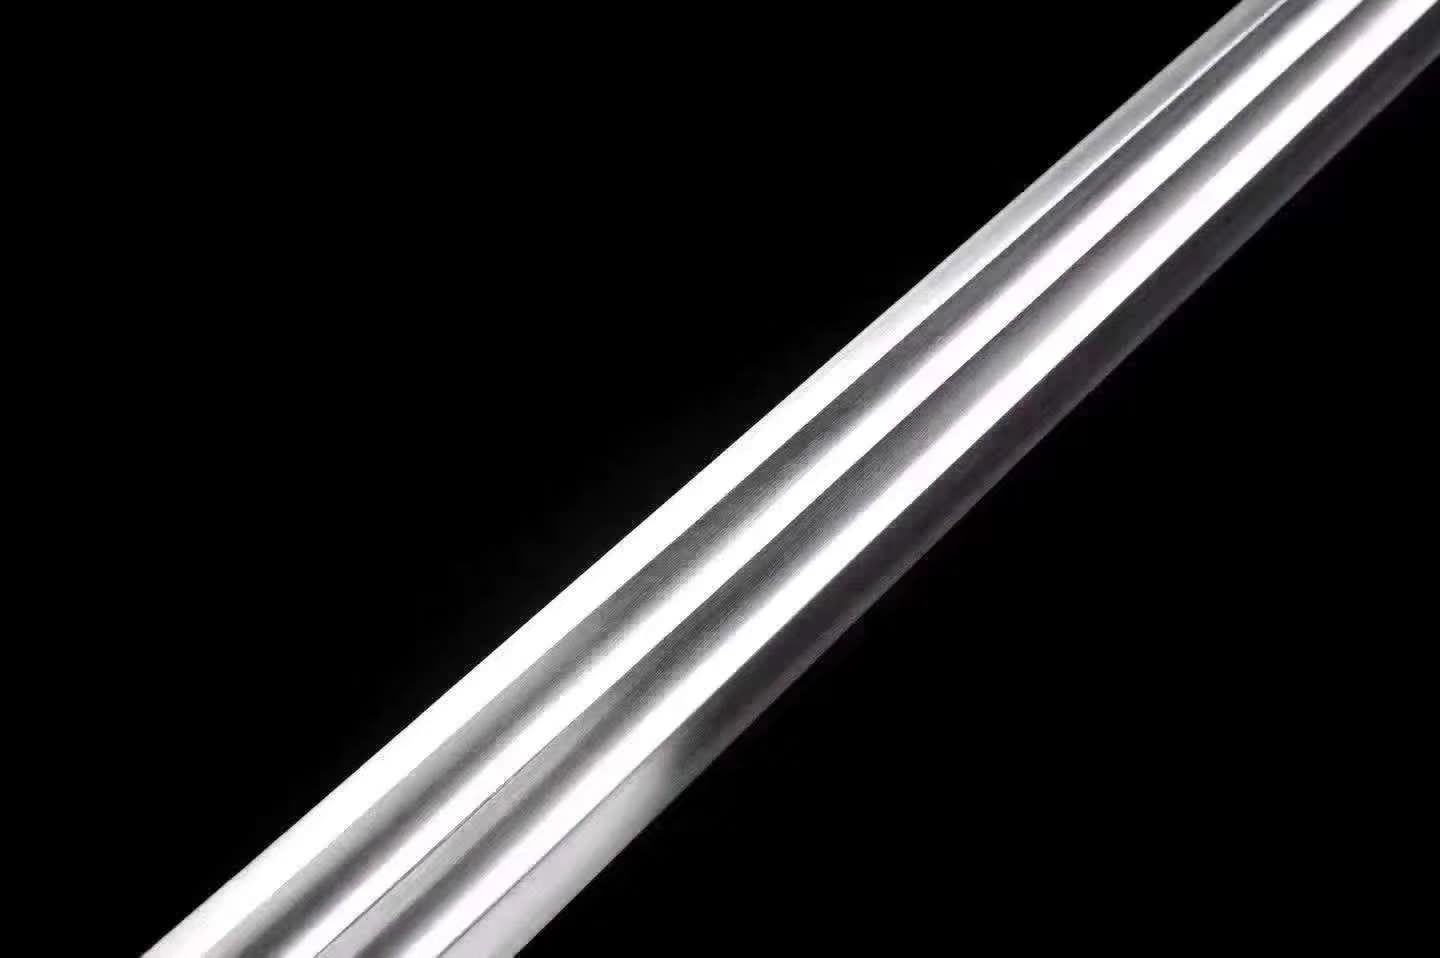 Yongle jian sword,Handmade High carbon steel blade,Redwood scabbard - Chinese sword shop